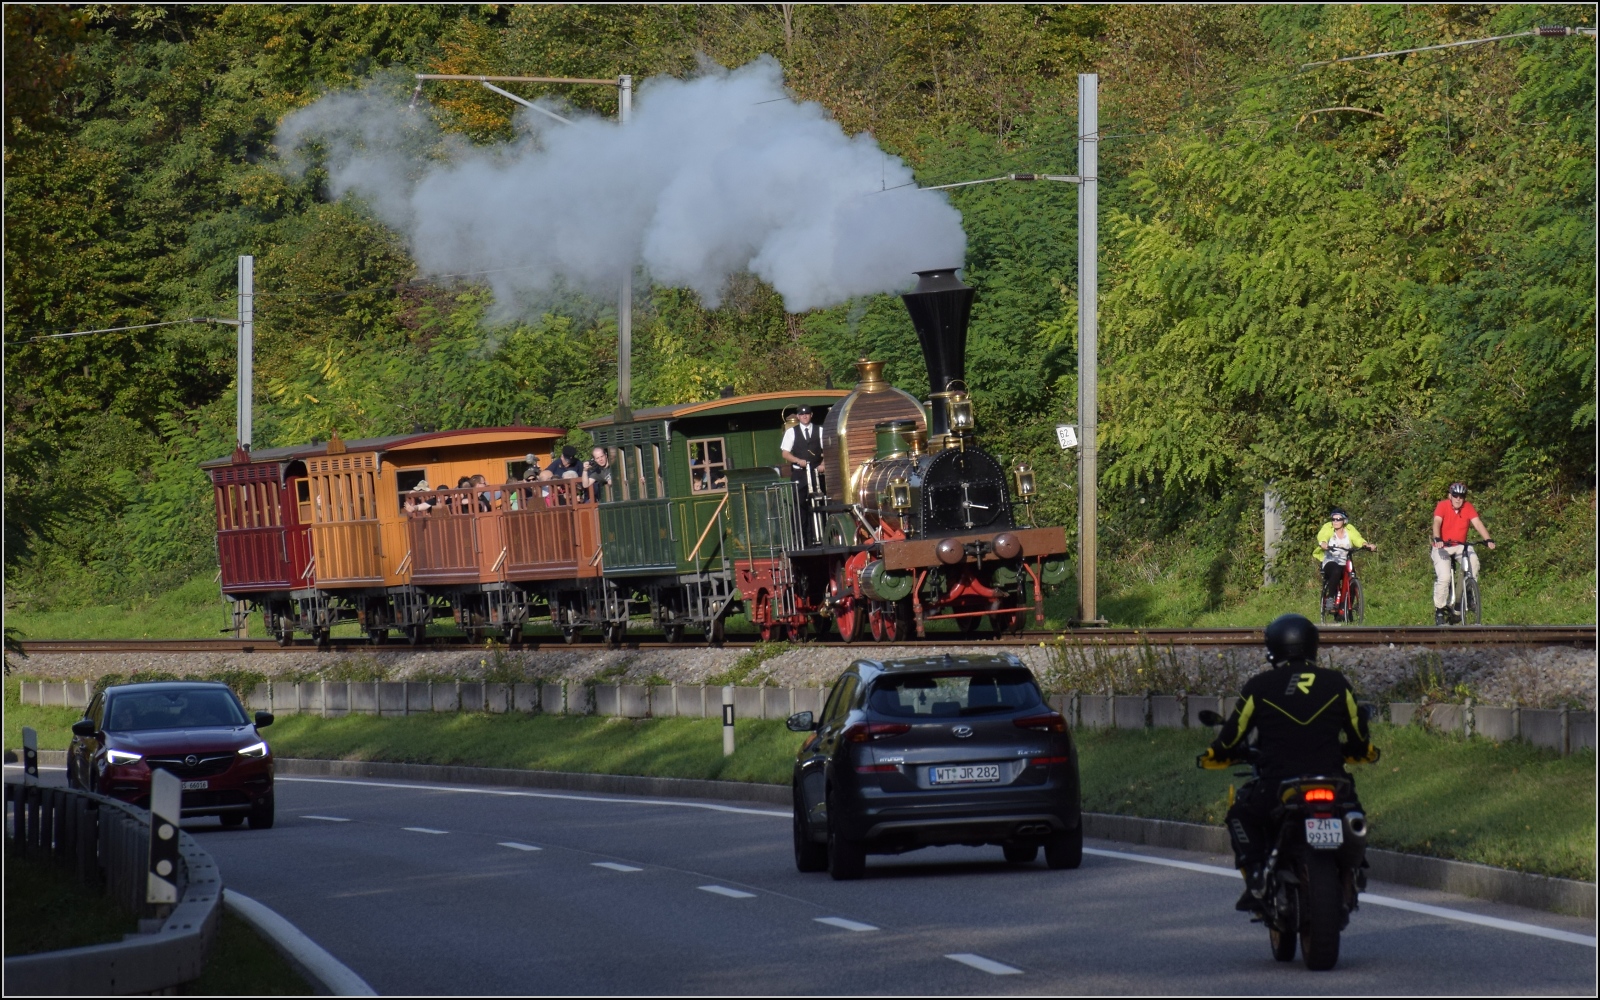 Spanisch-Brötli-Bahn zum 175. Geburtstag.

Rheinsulz, Oktober 2022.